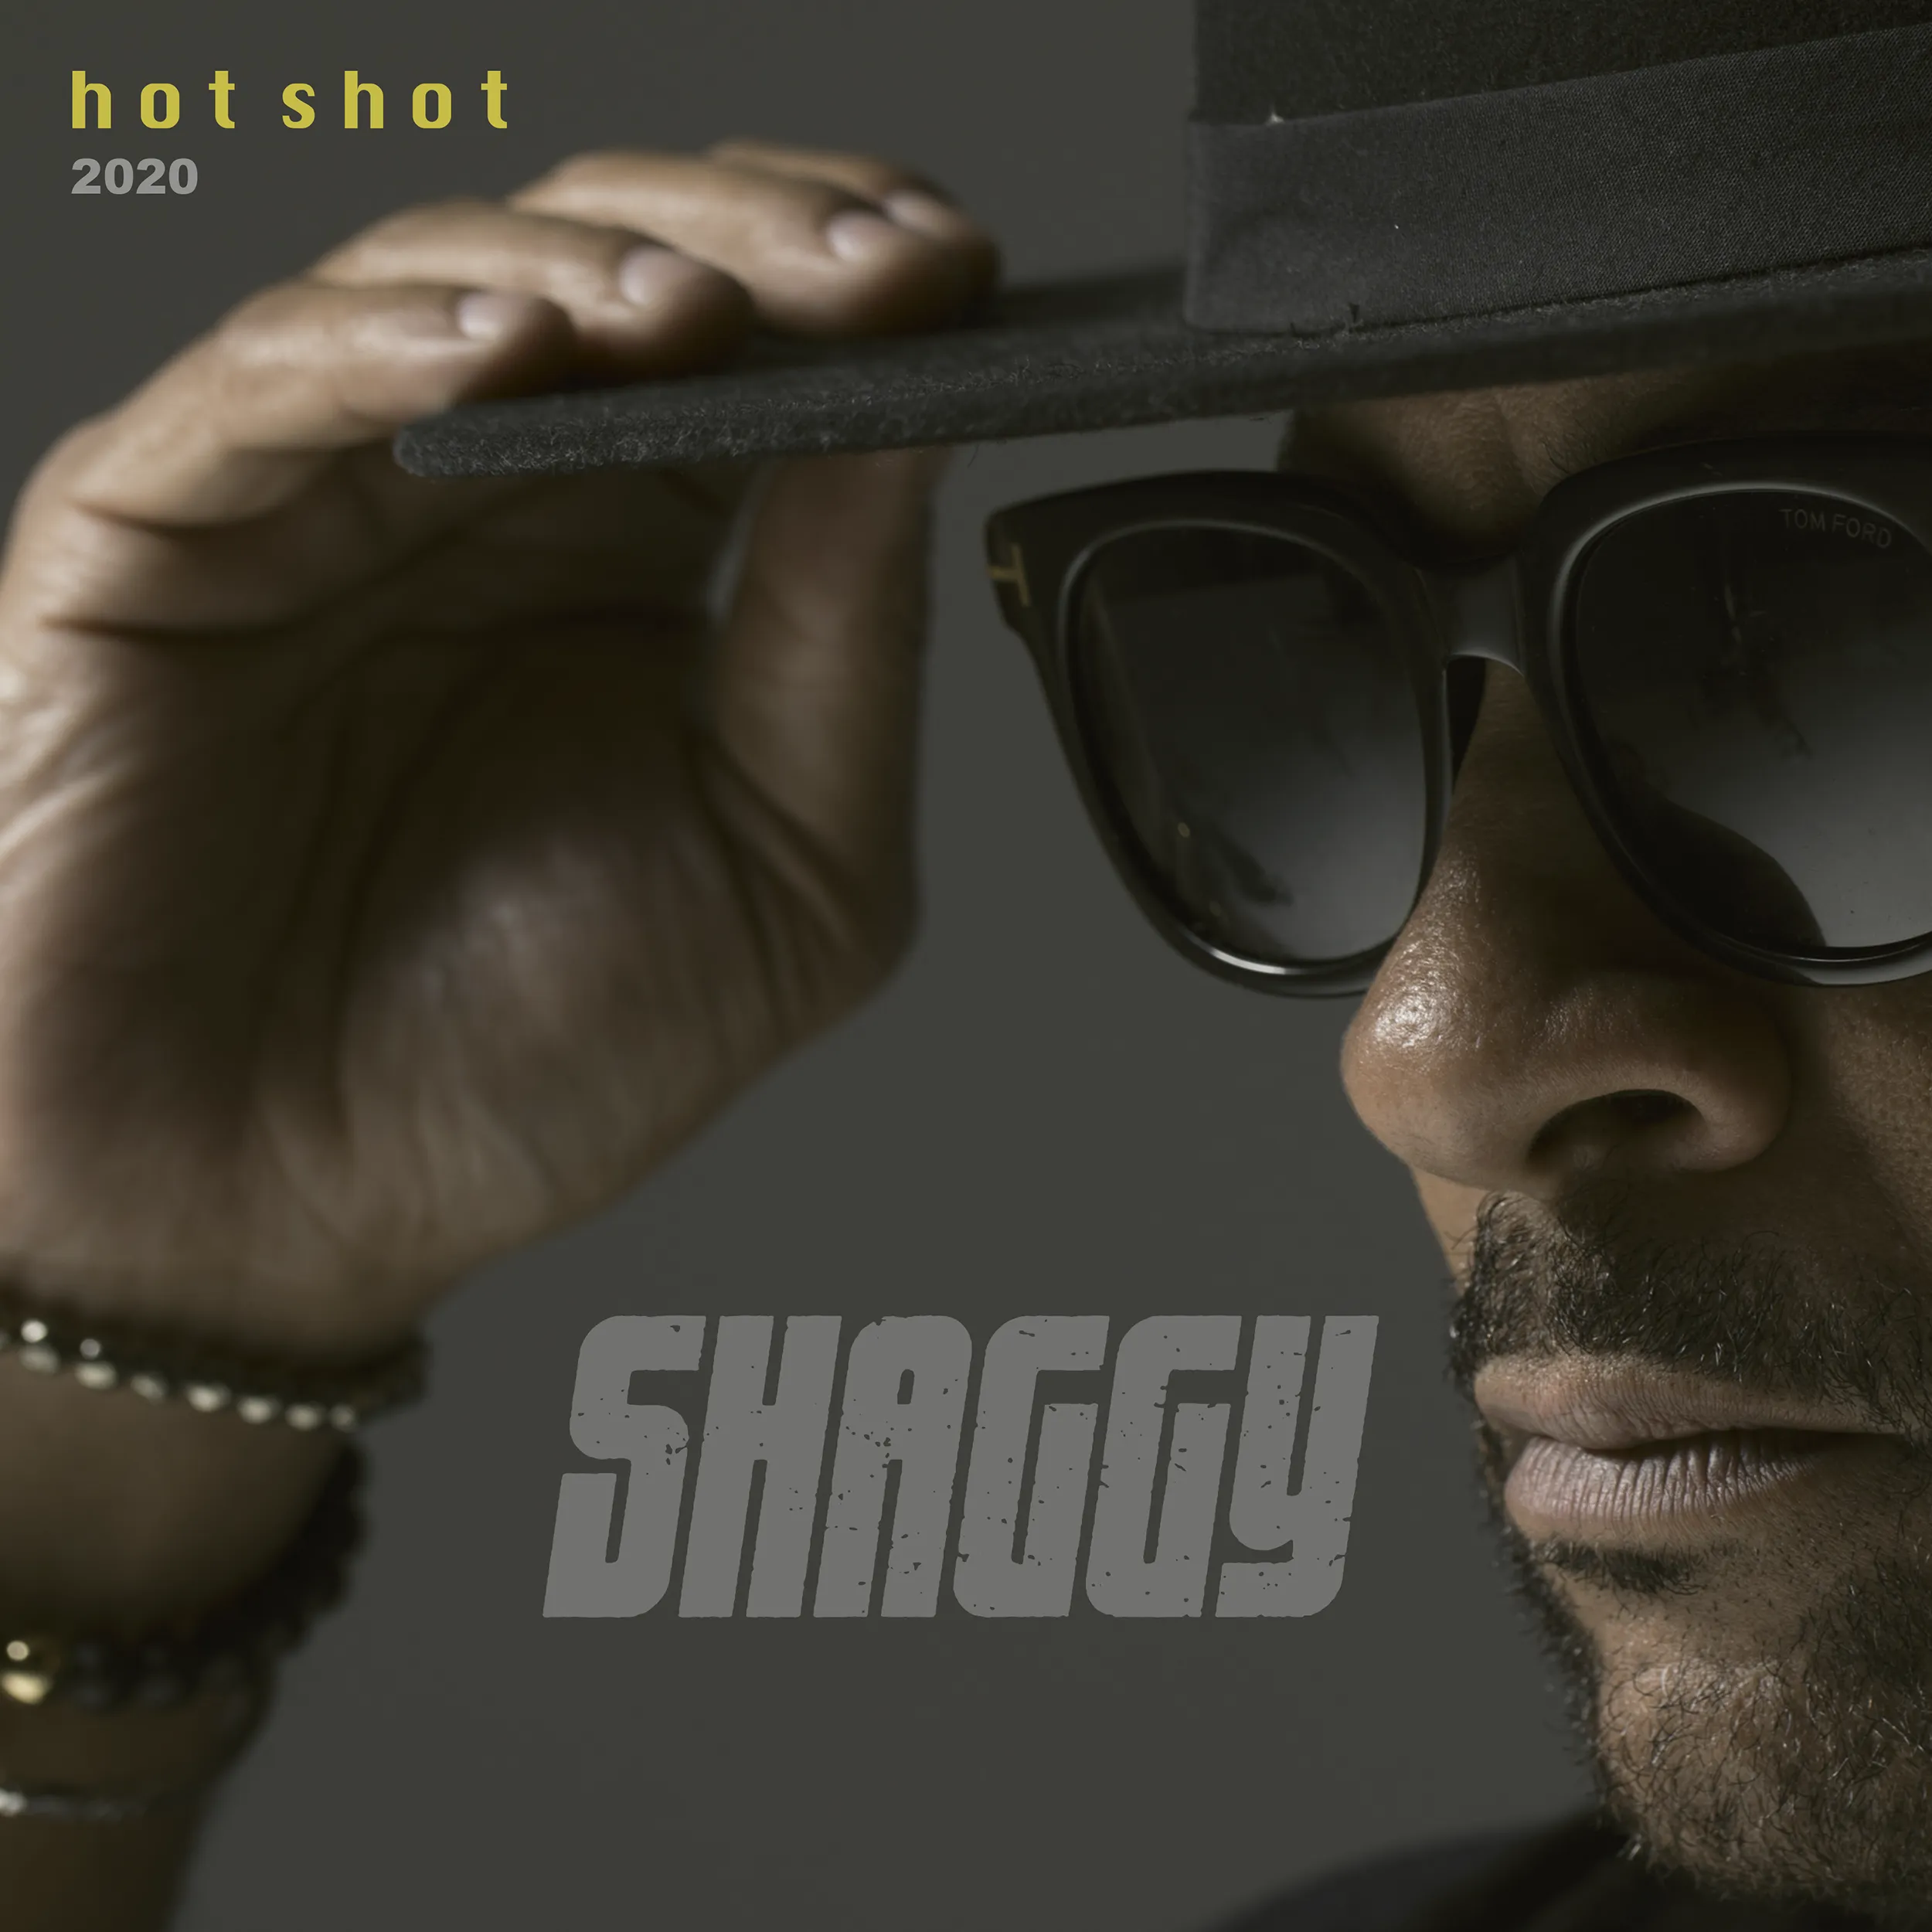 projet : Shaggy - Hotshot 2020